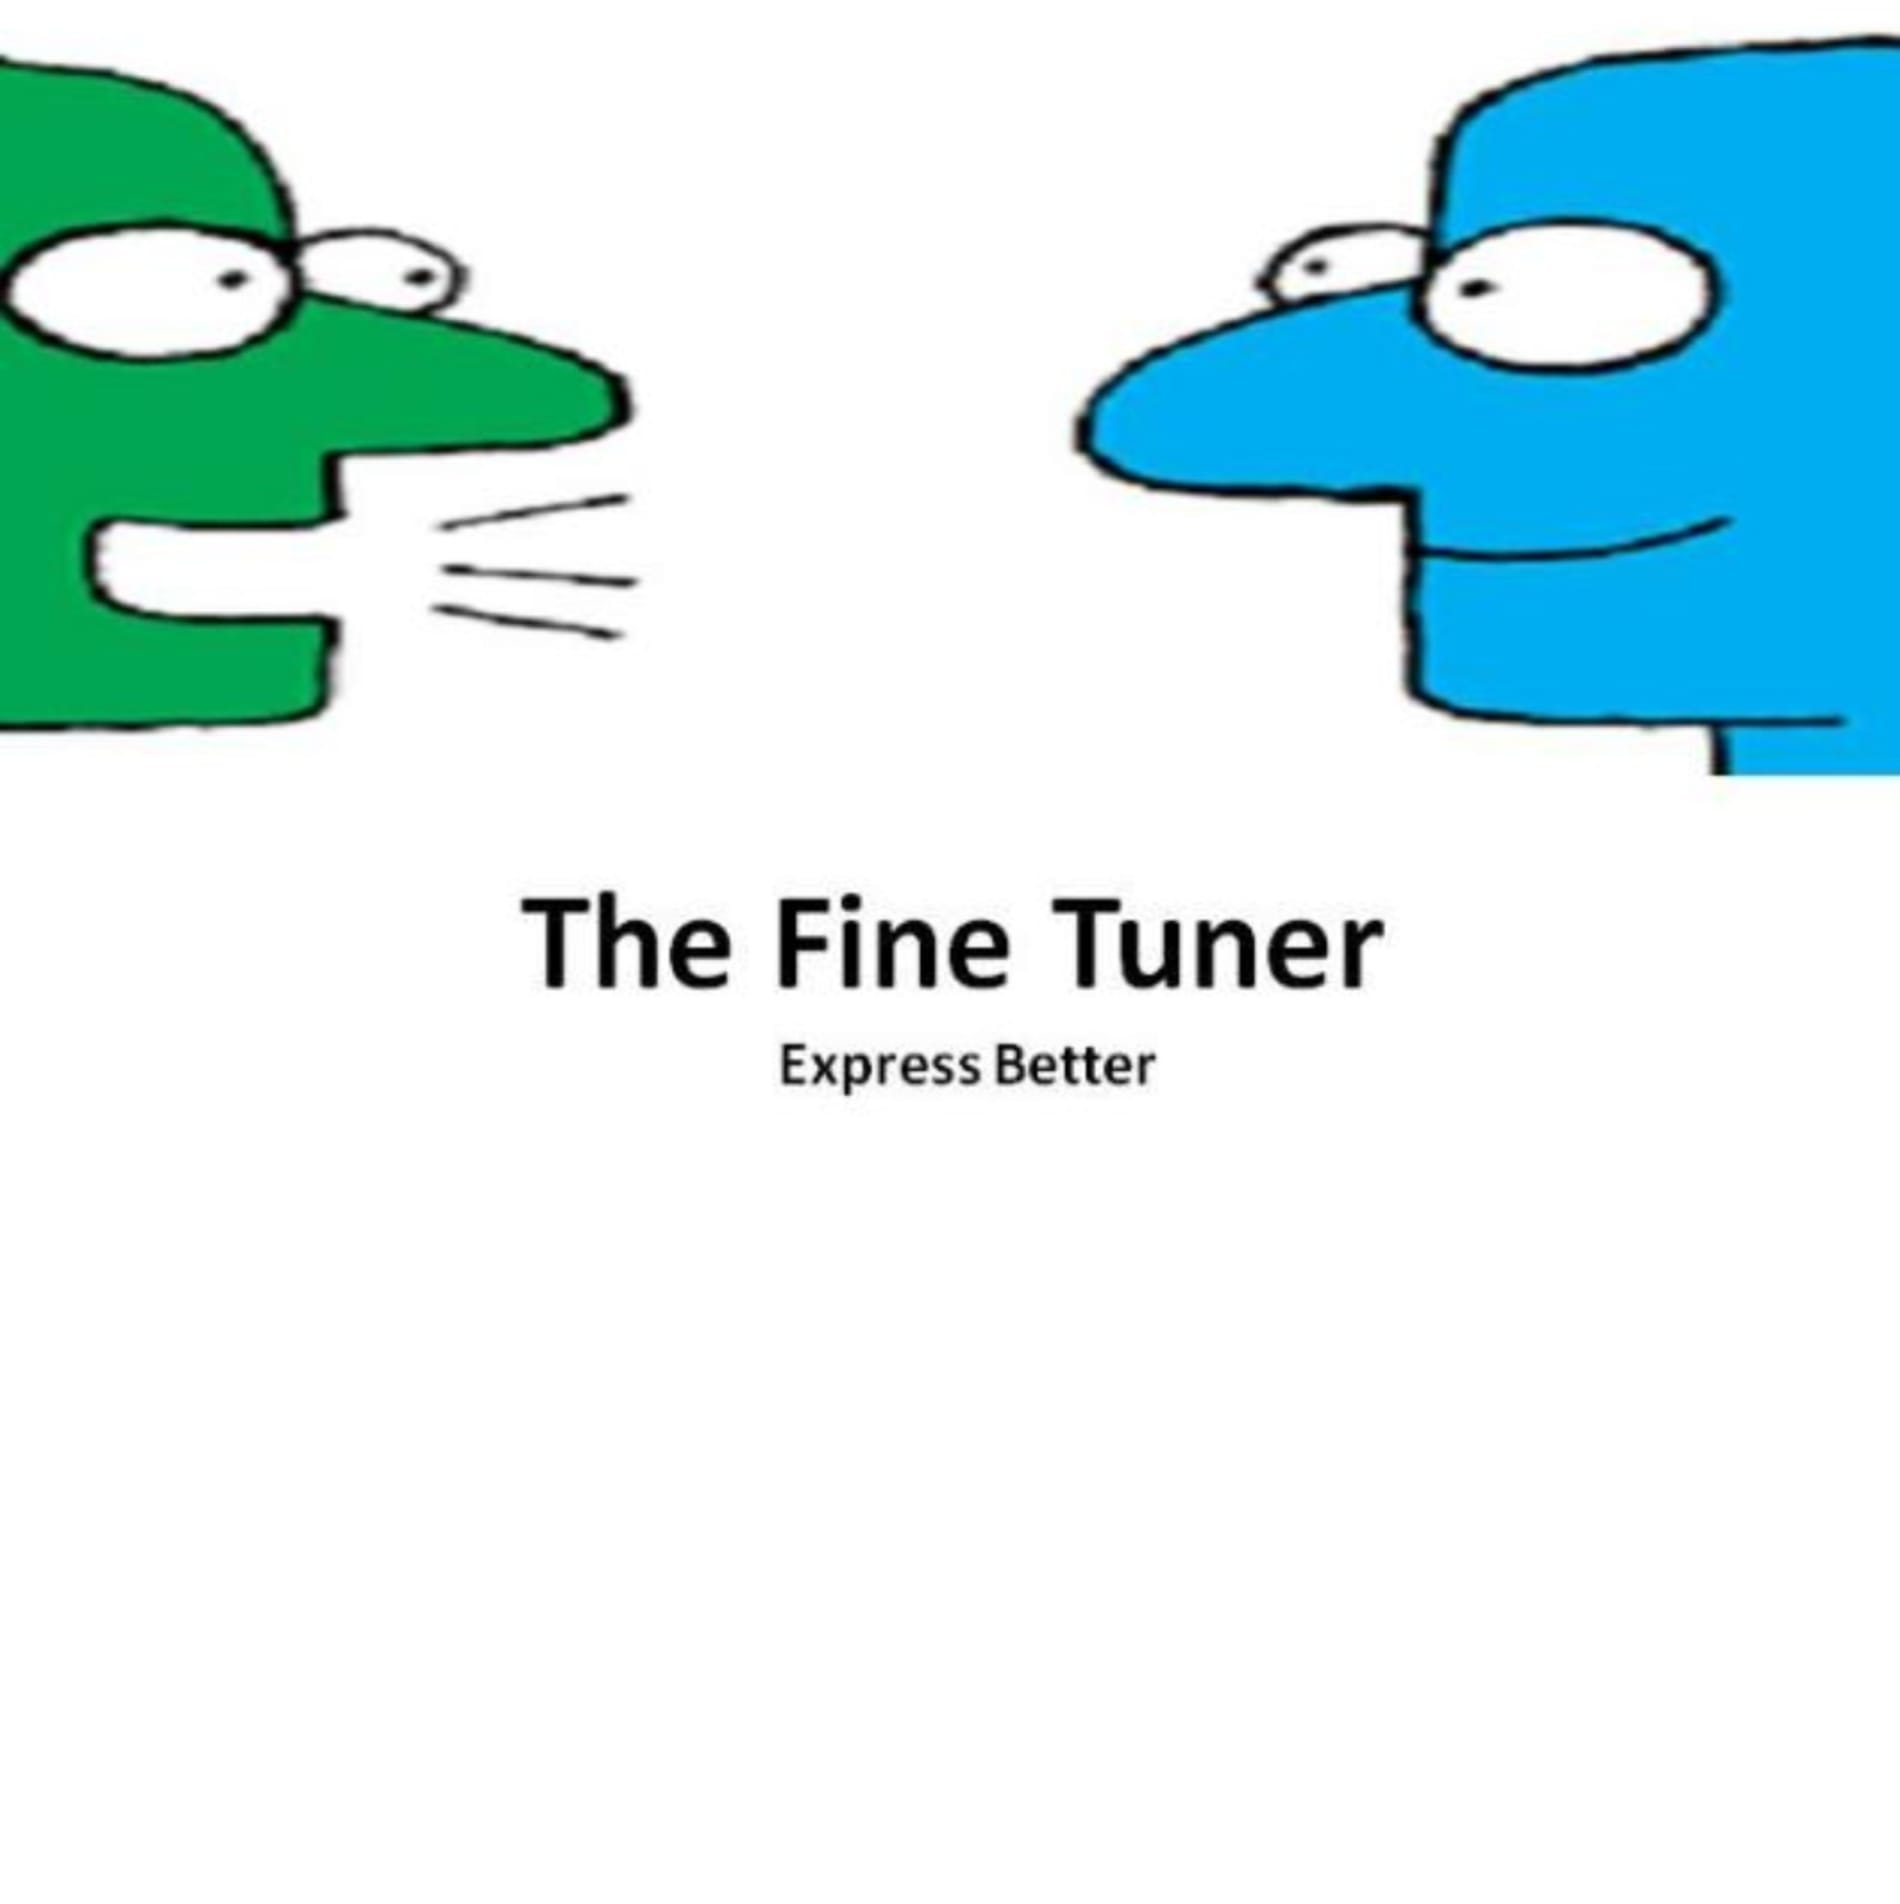 The Fine Tuner